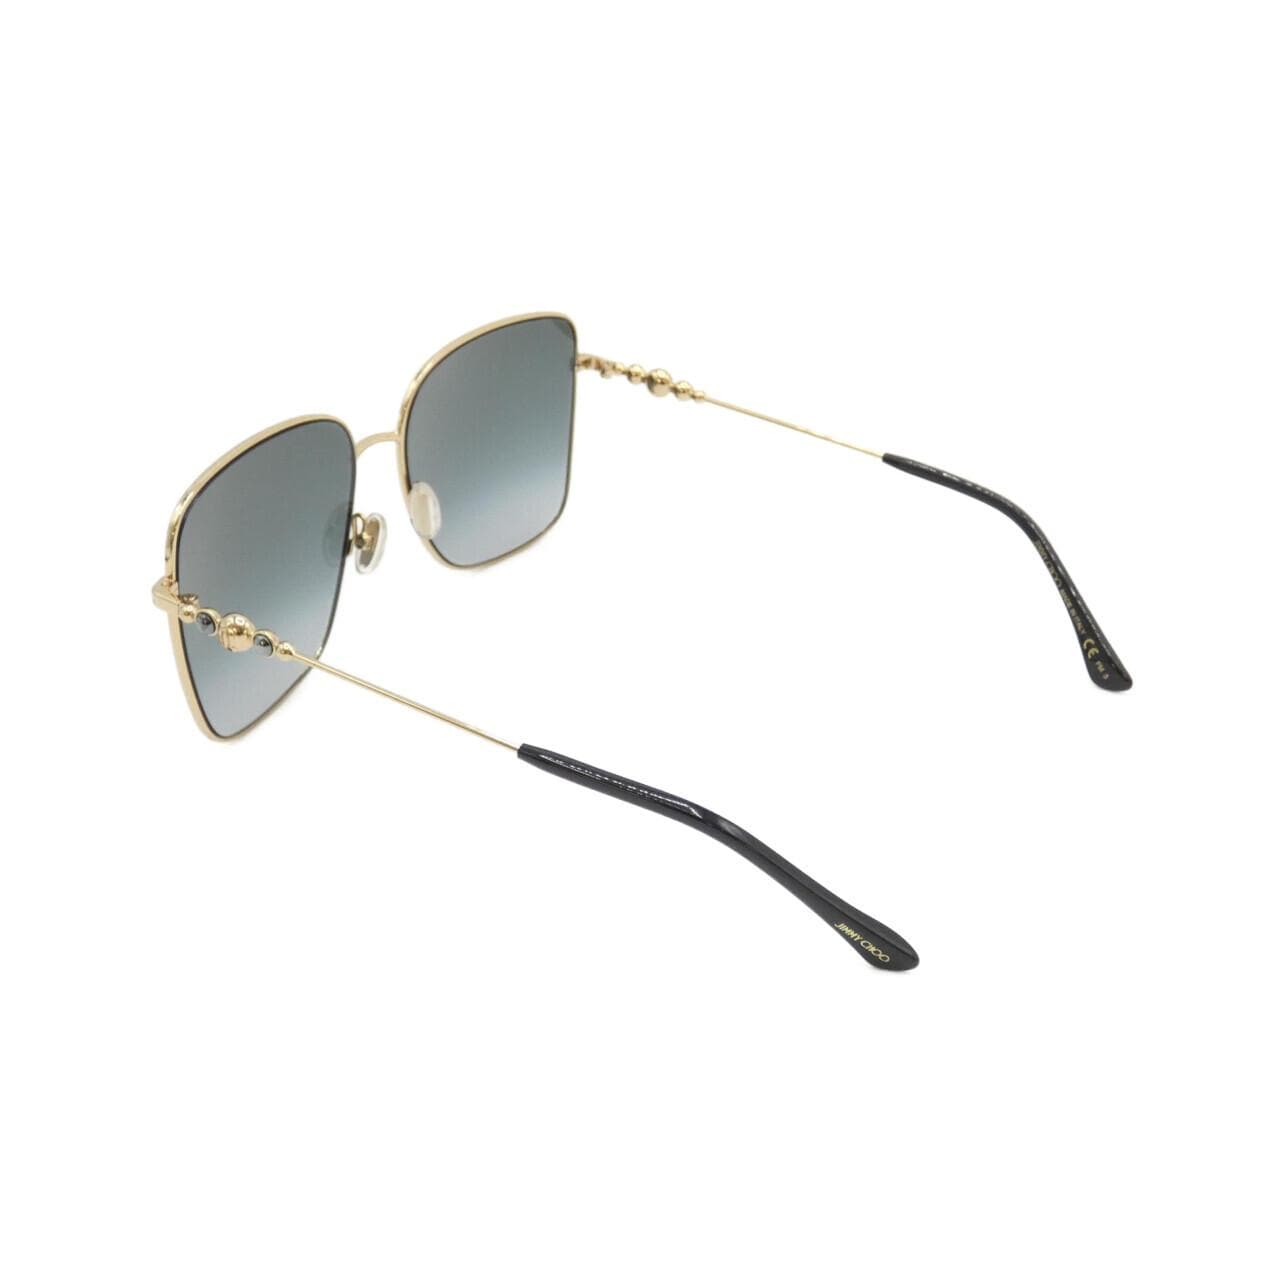 [BRAND NEW] JIMMY CHOO HESTER Sunglasses